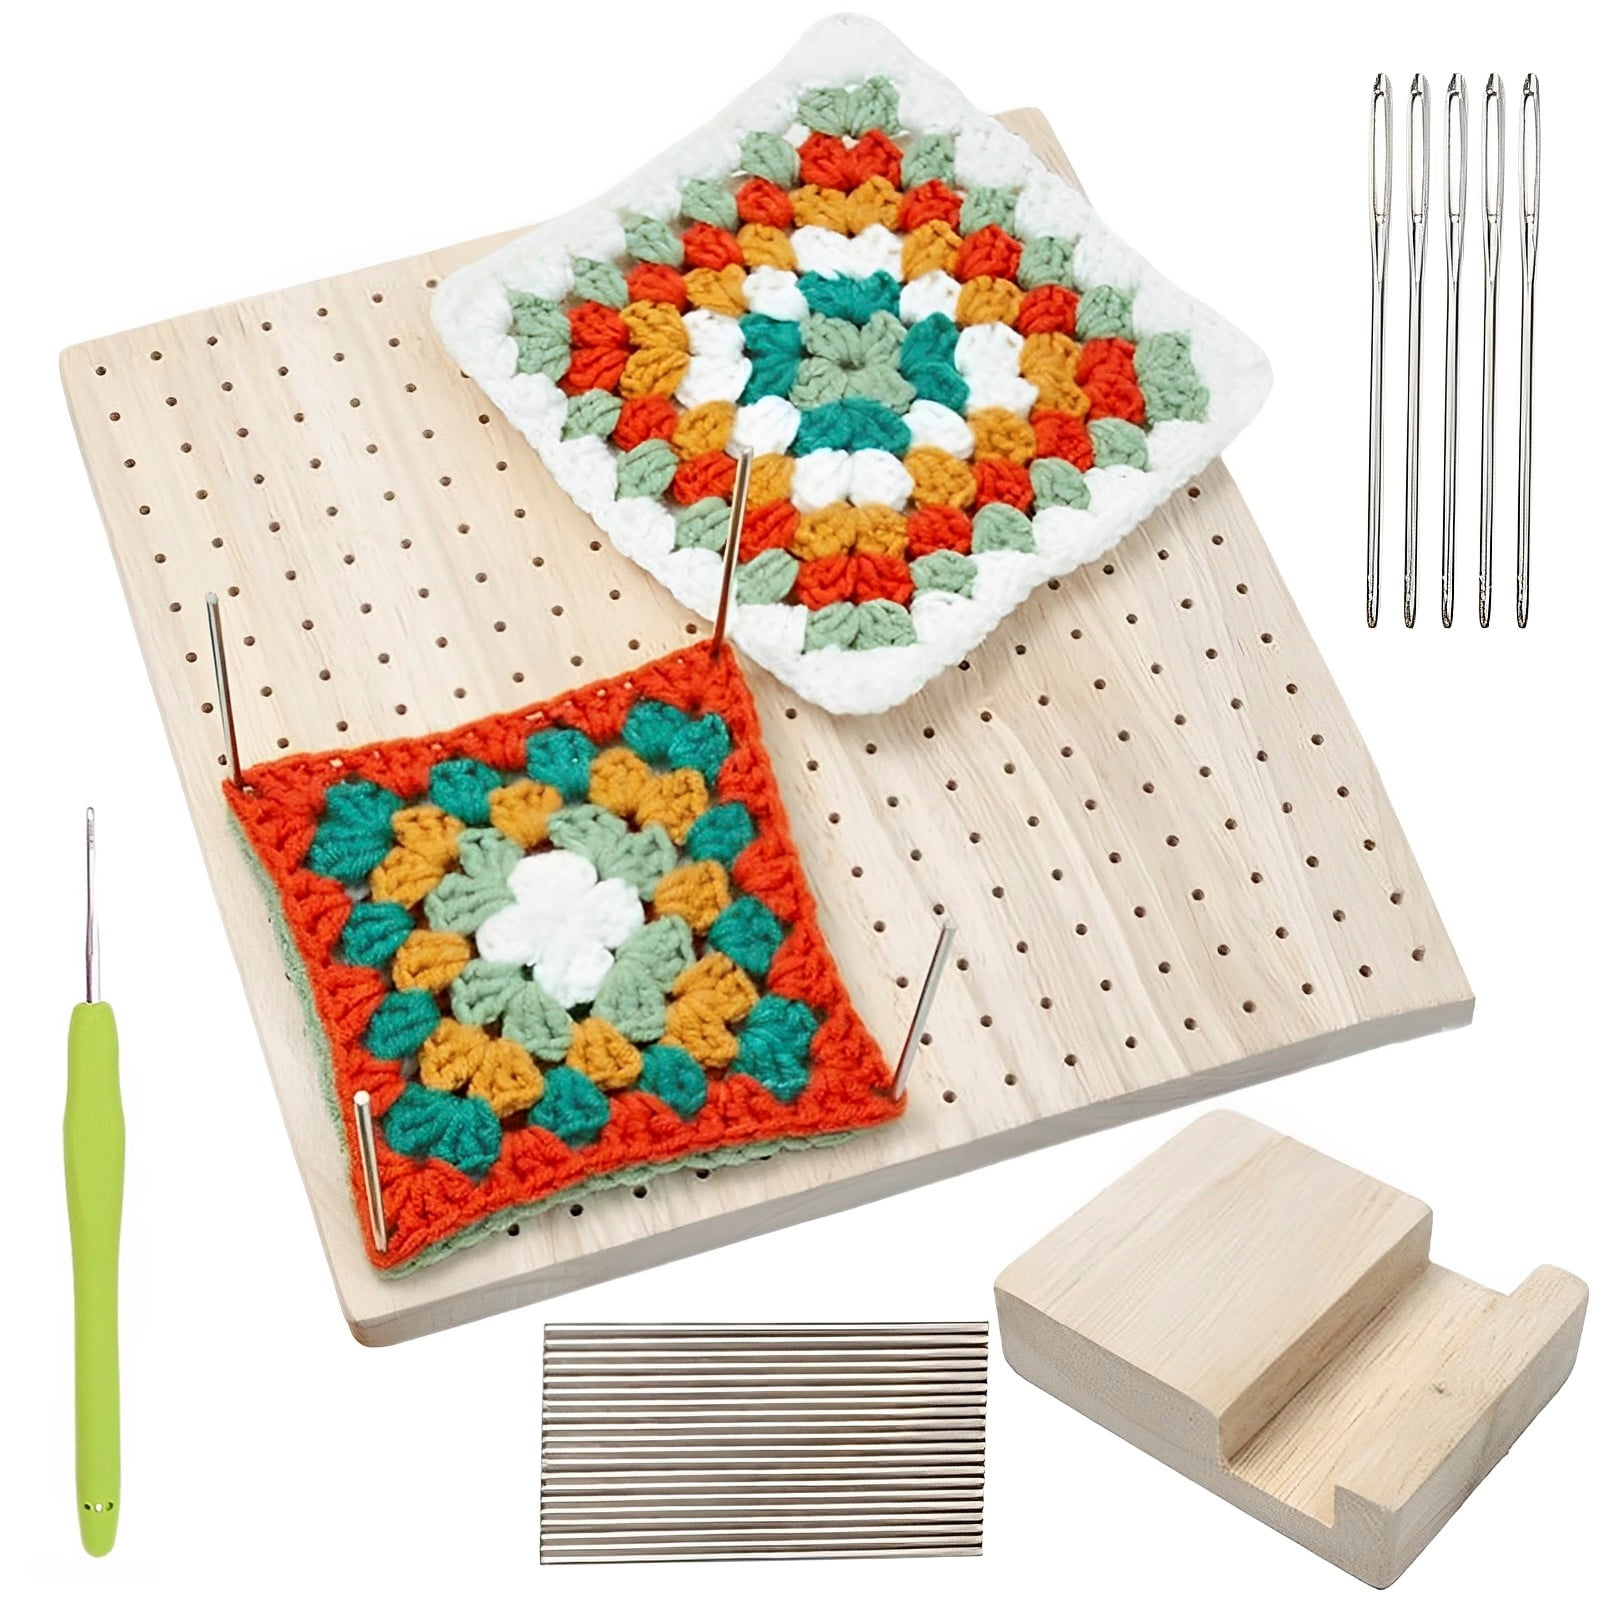 Ihvewuo Wooden Crochet Blocking Board Handcrafted Knitting Blocking Mat Set for Knitting Needlework, Brown